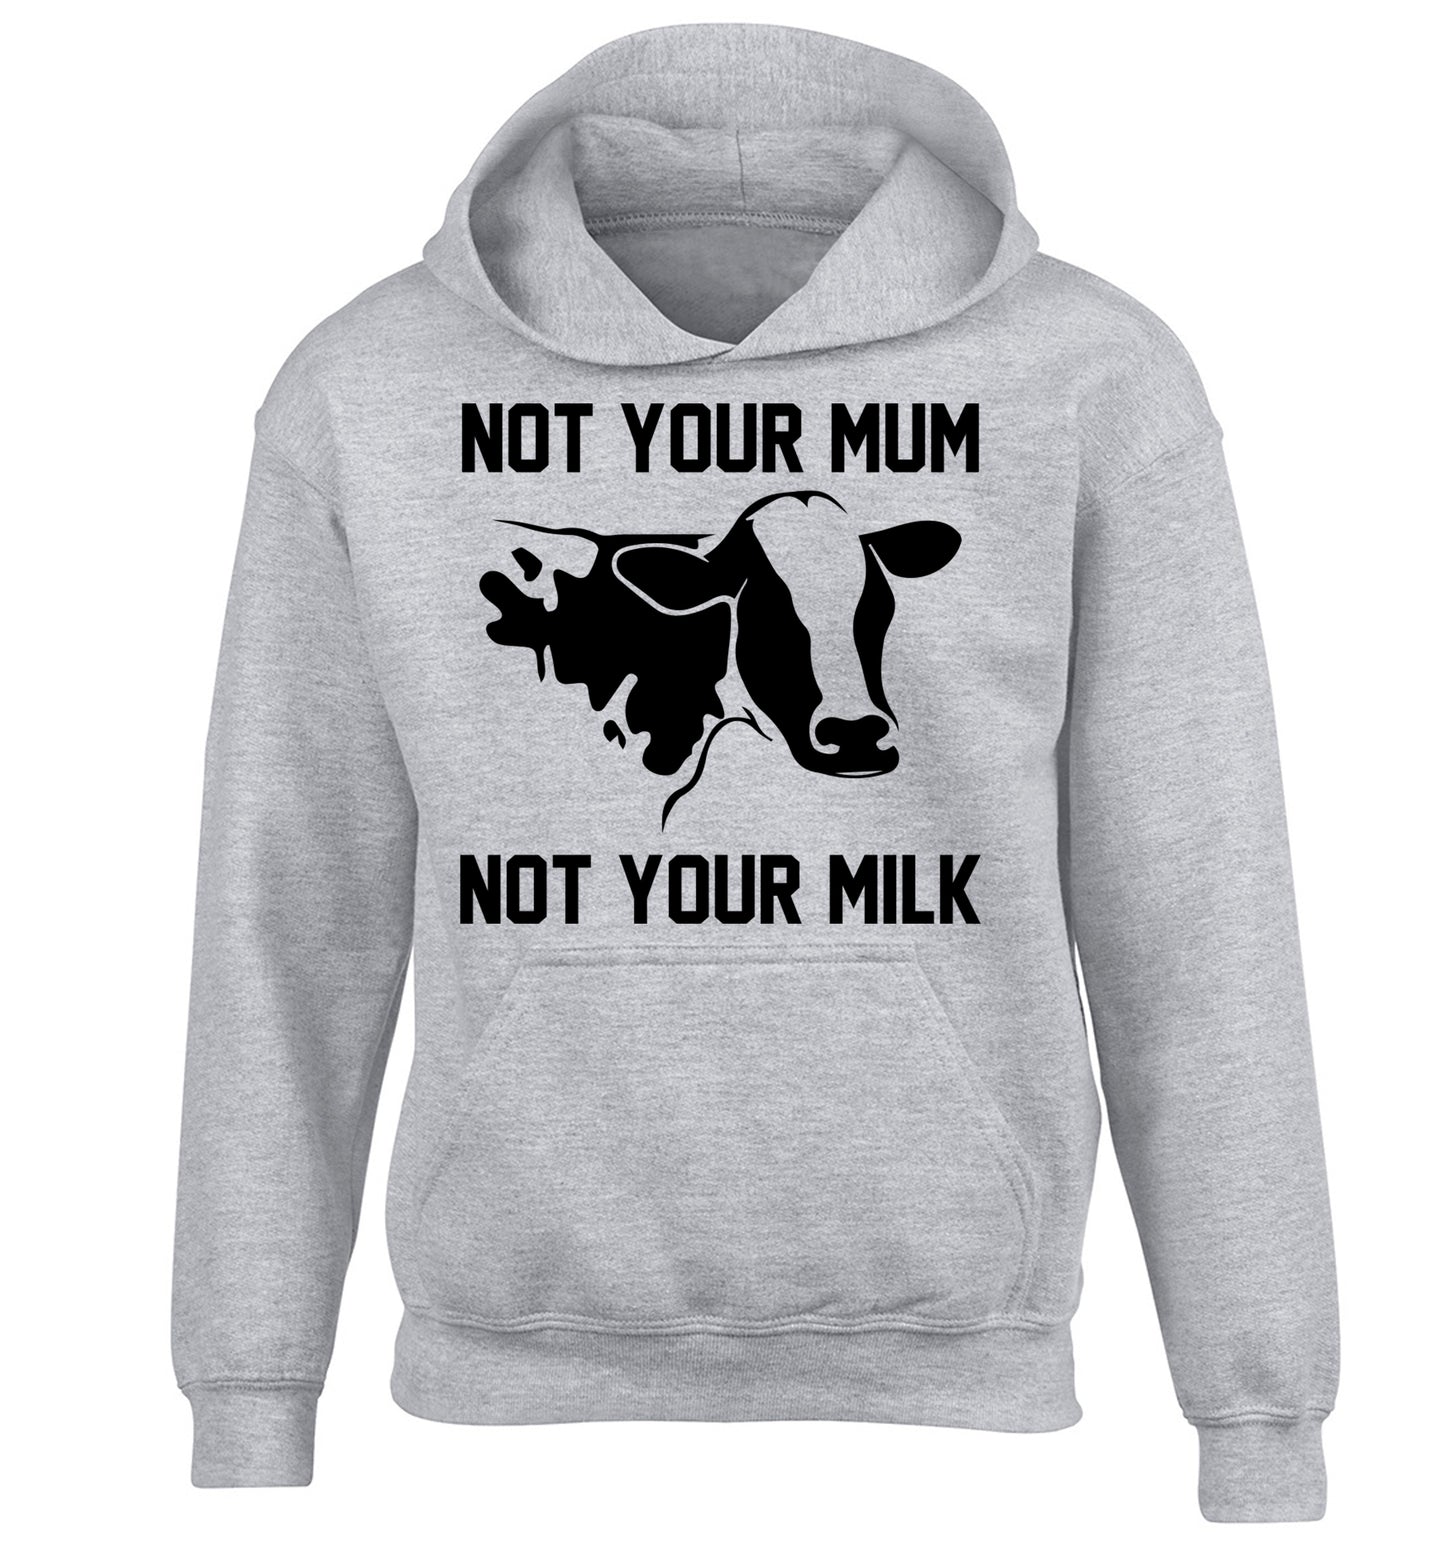 Not your mum not your milk children's grey hoodie 12-14 Years